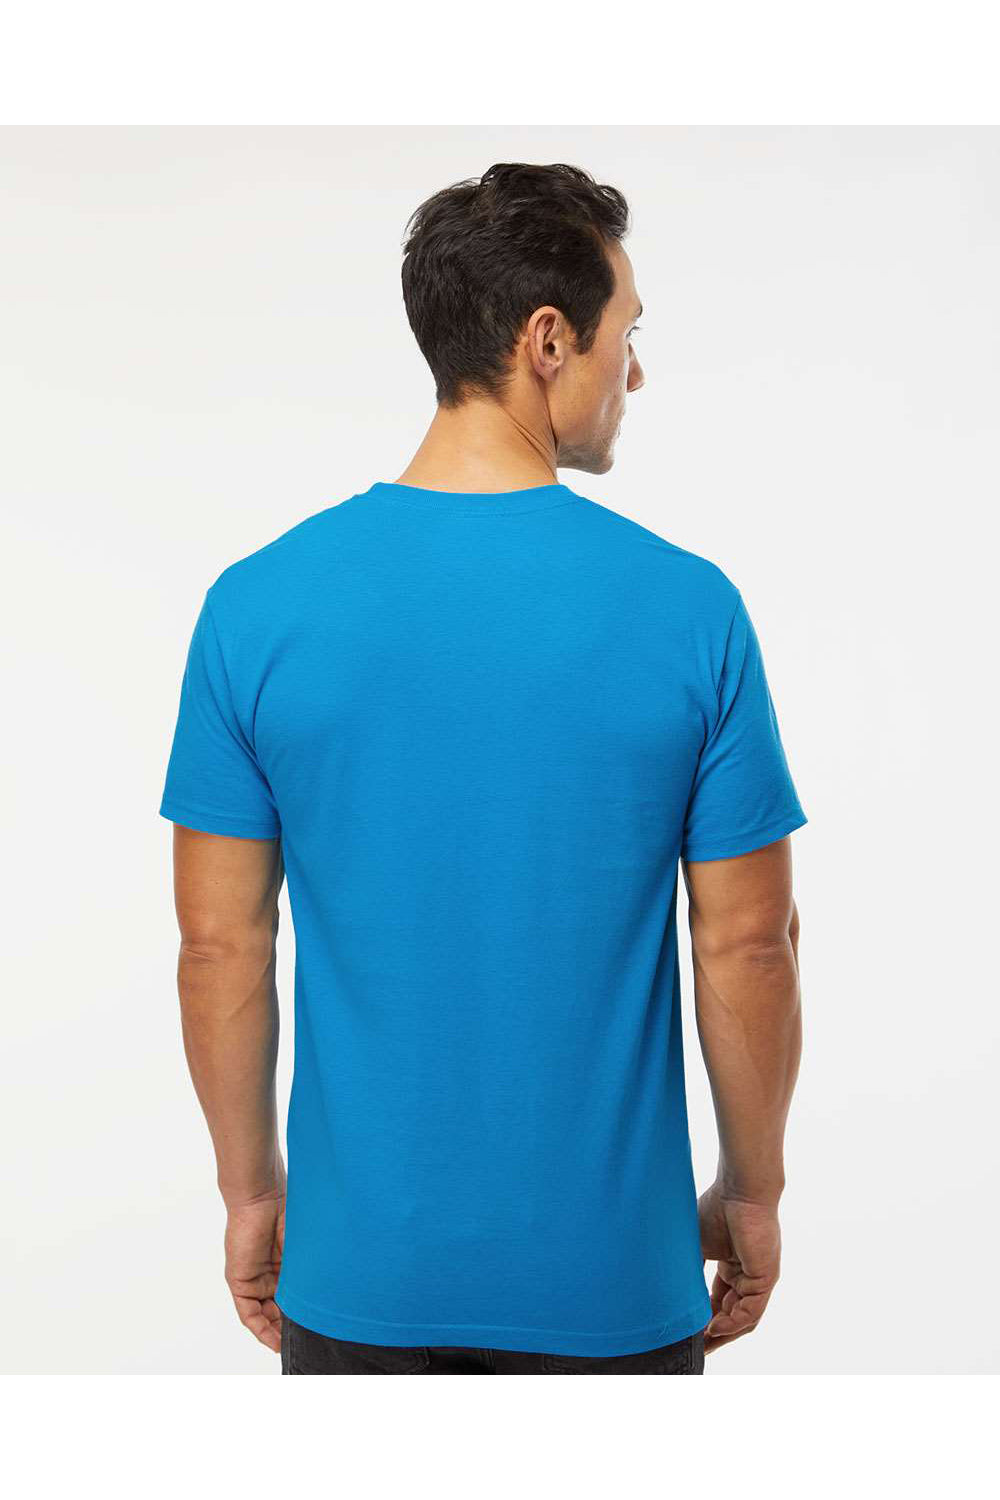 M&O 4800 Mens Gold Soft Touch Short Sleeve Crewneck T-Shirt Turquoise Blue Model Back